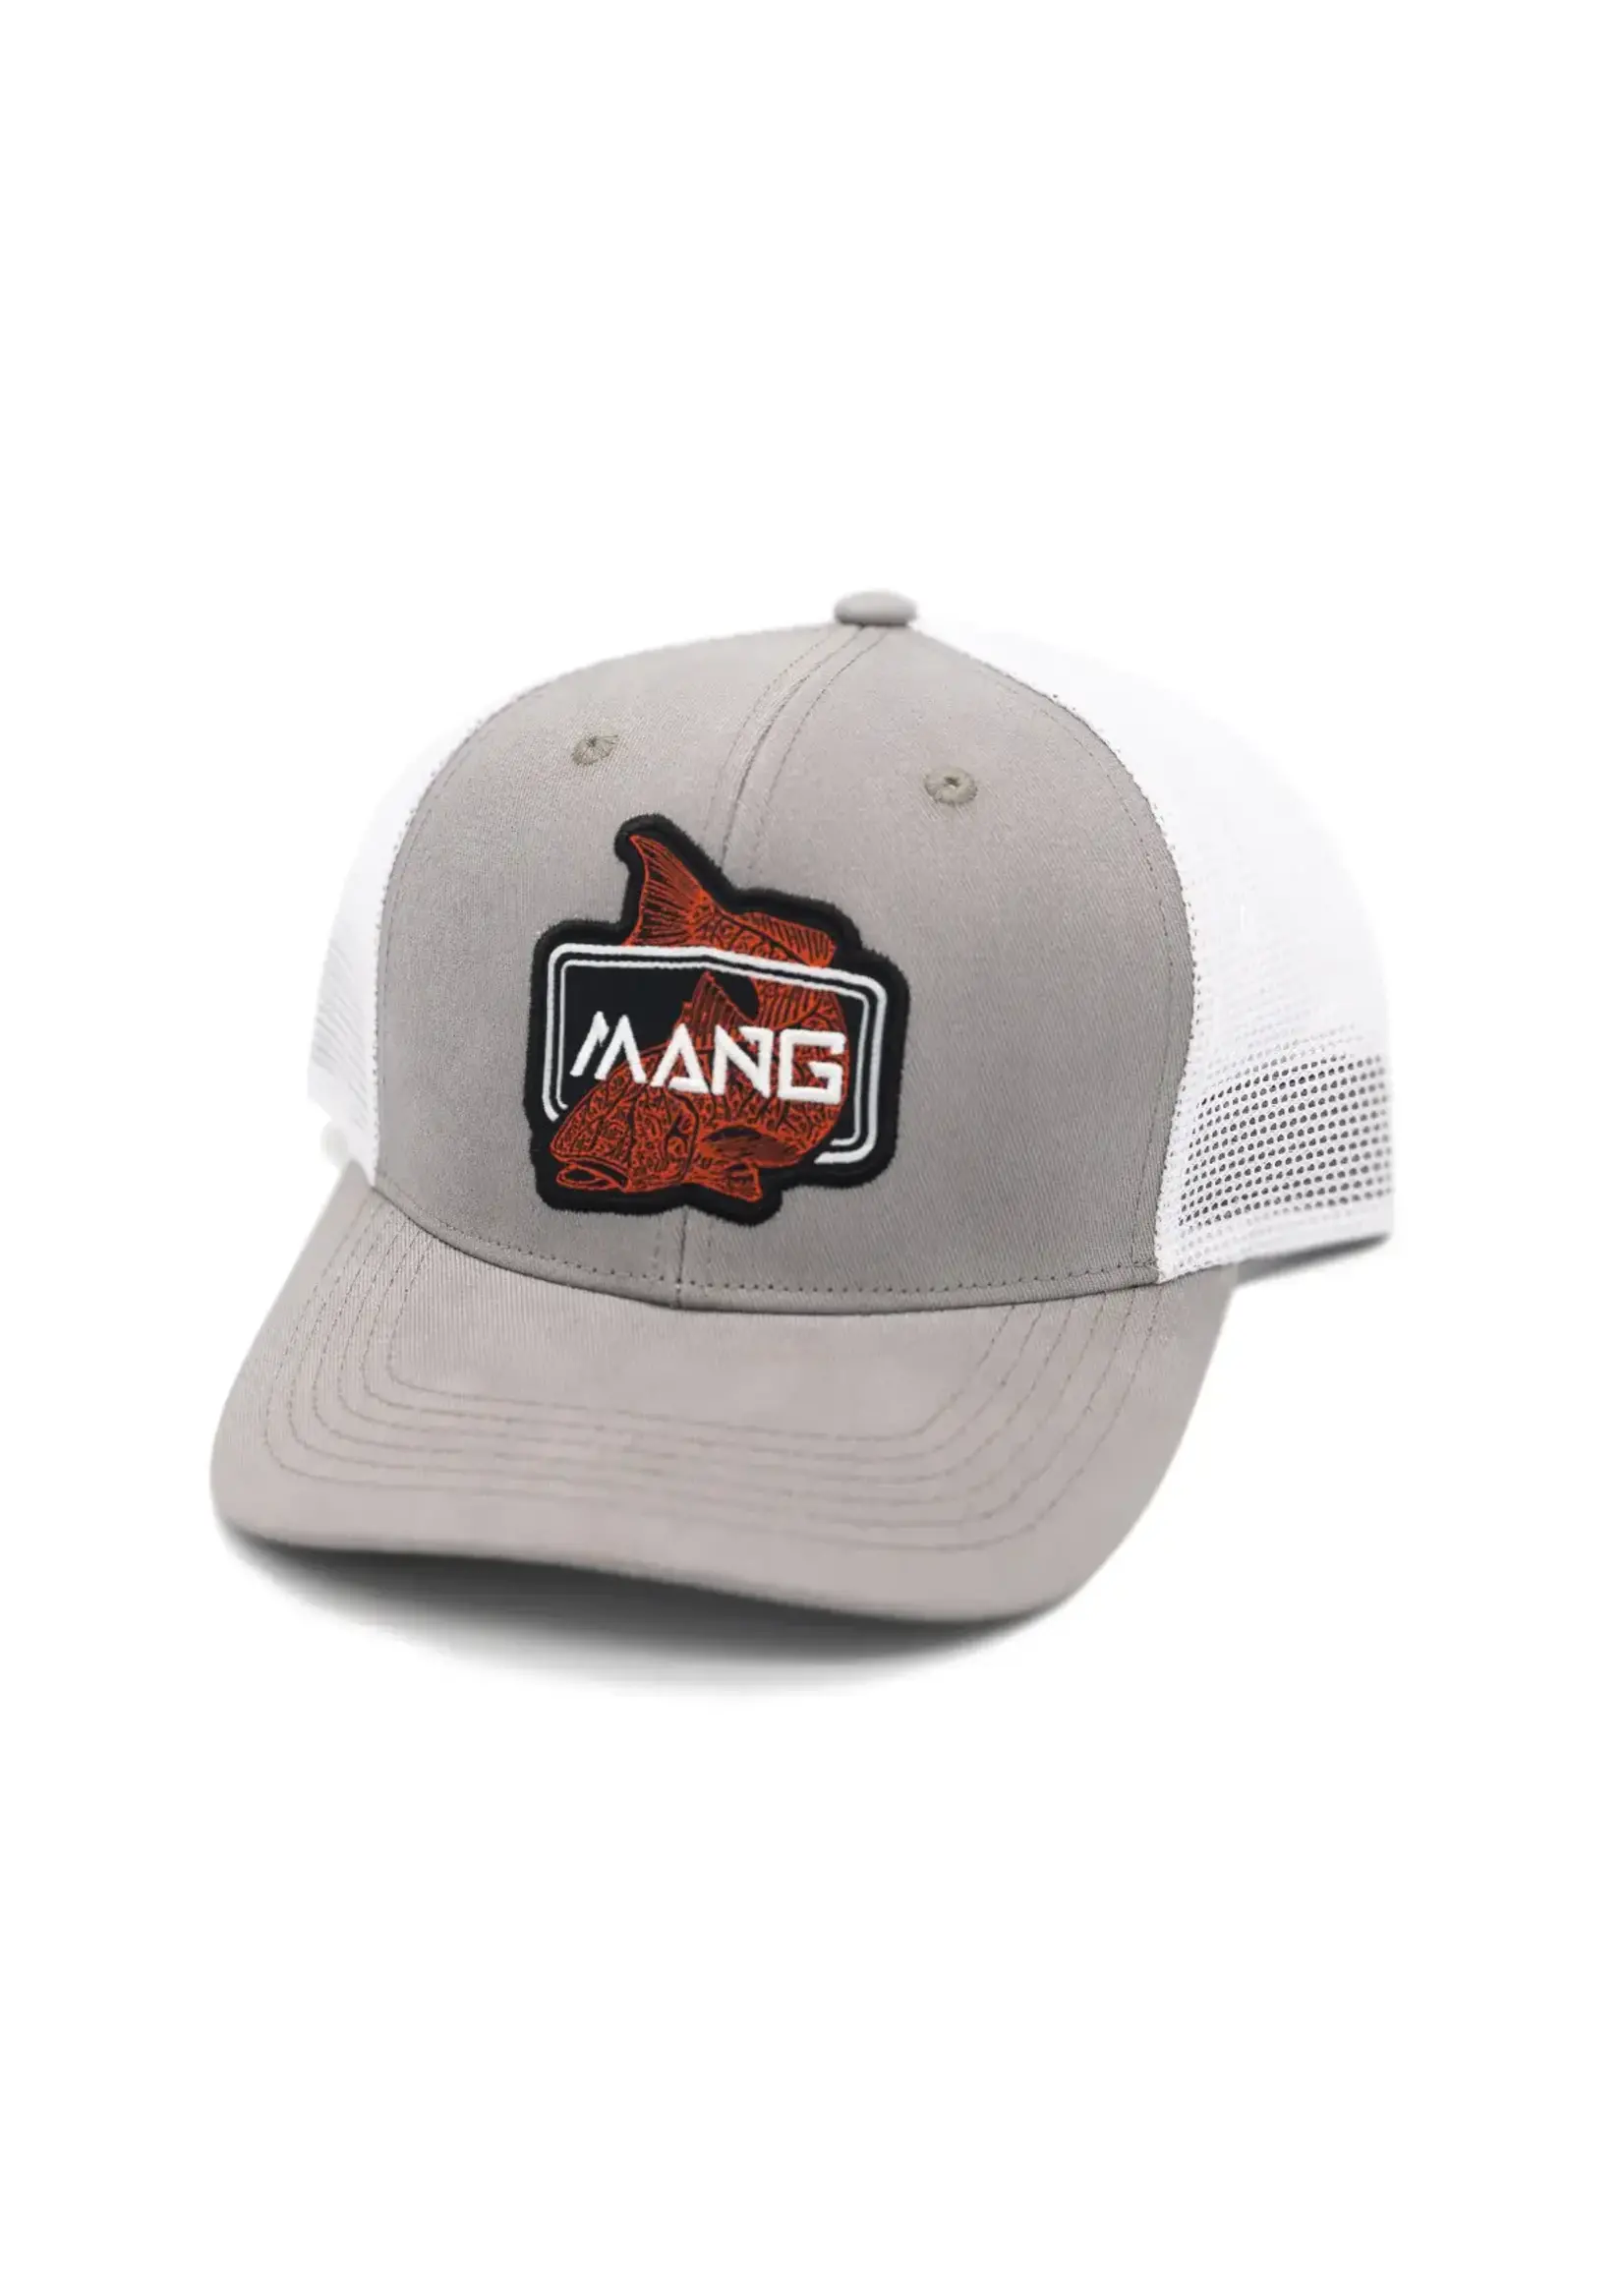 Mang Hat: Fuego Redfish Trucker